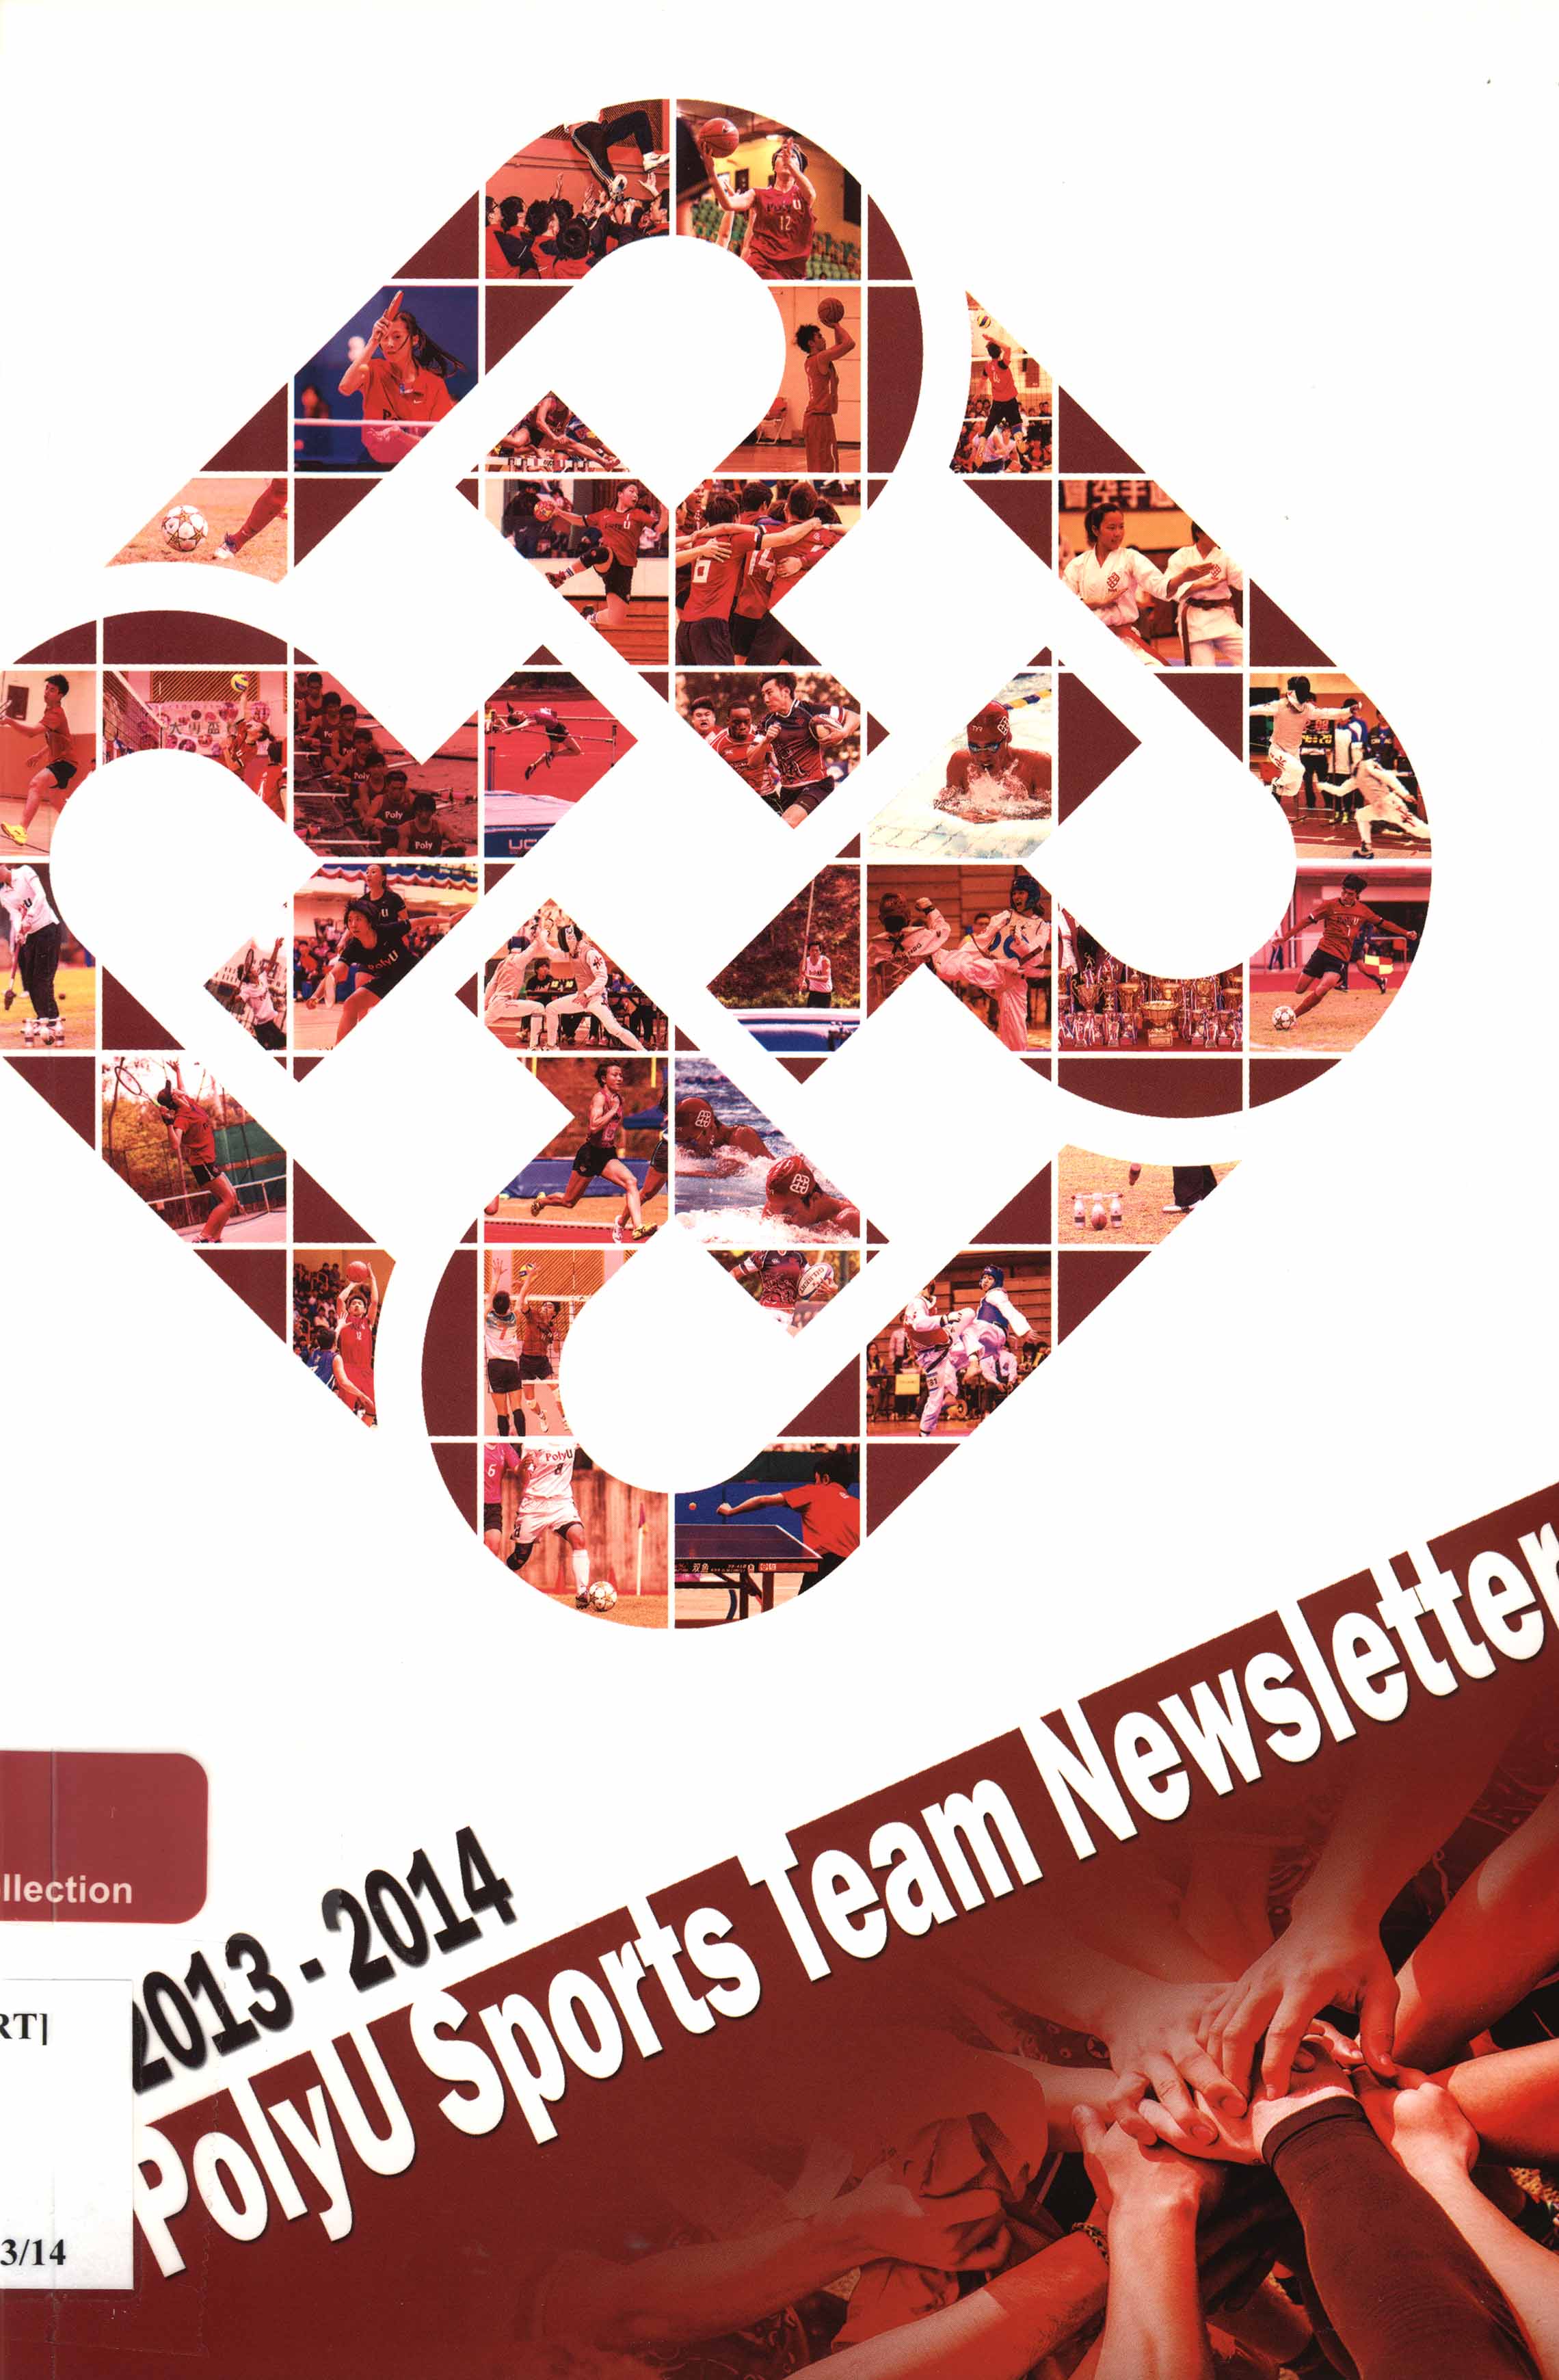 PolyU sports team newsletter. 2013/14